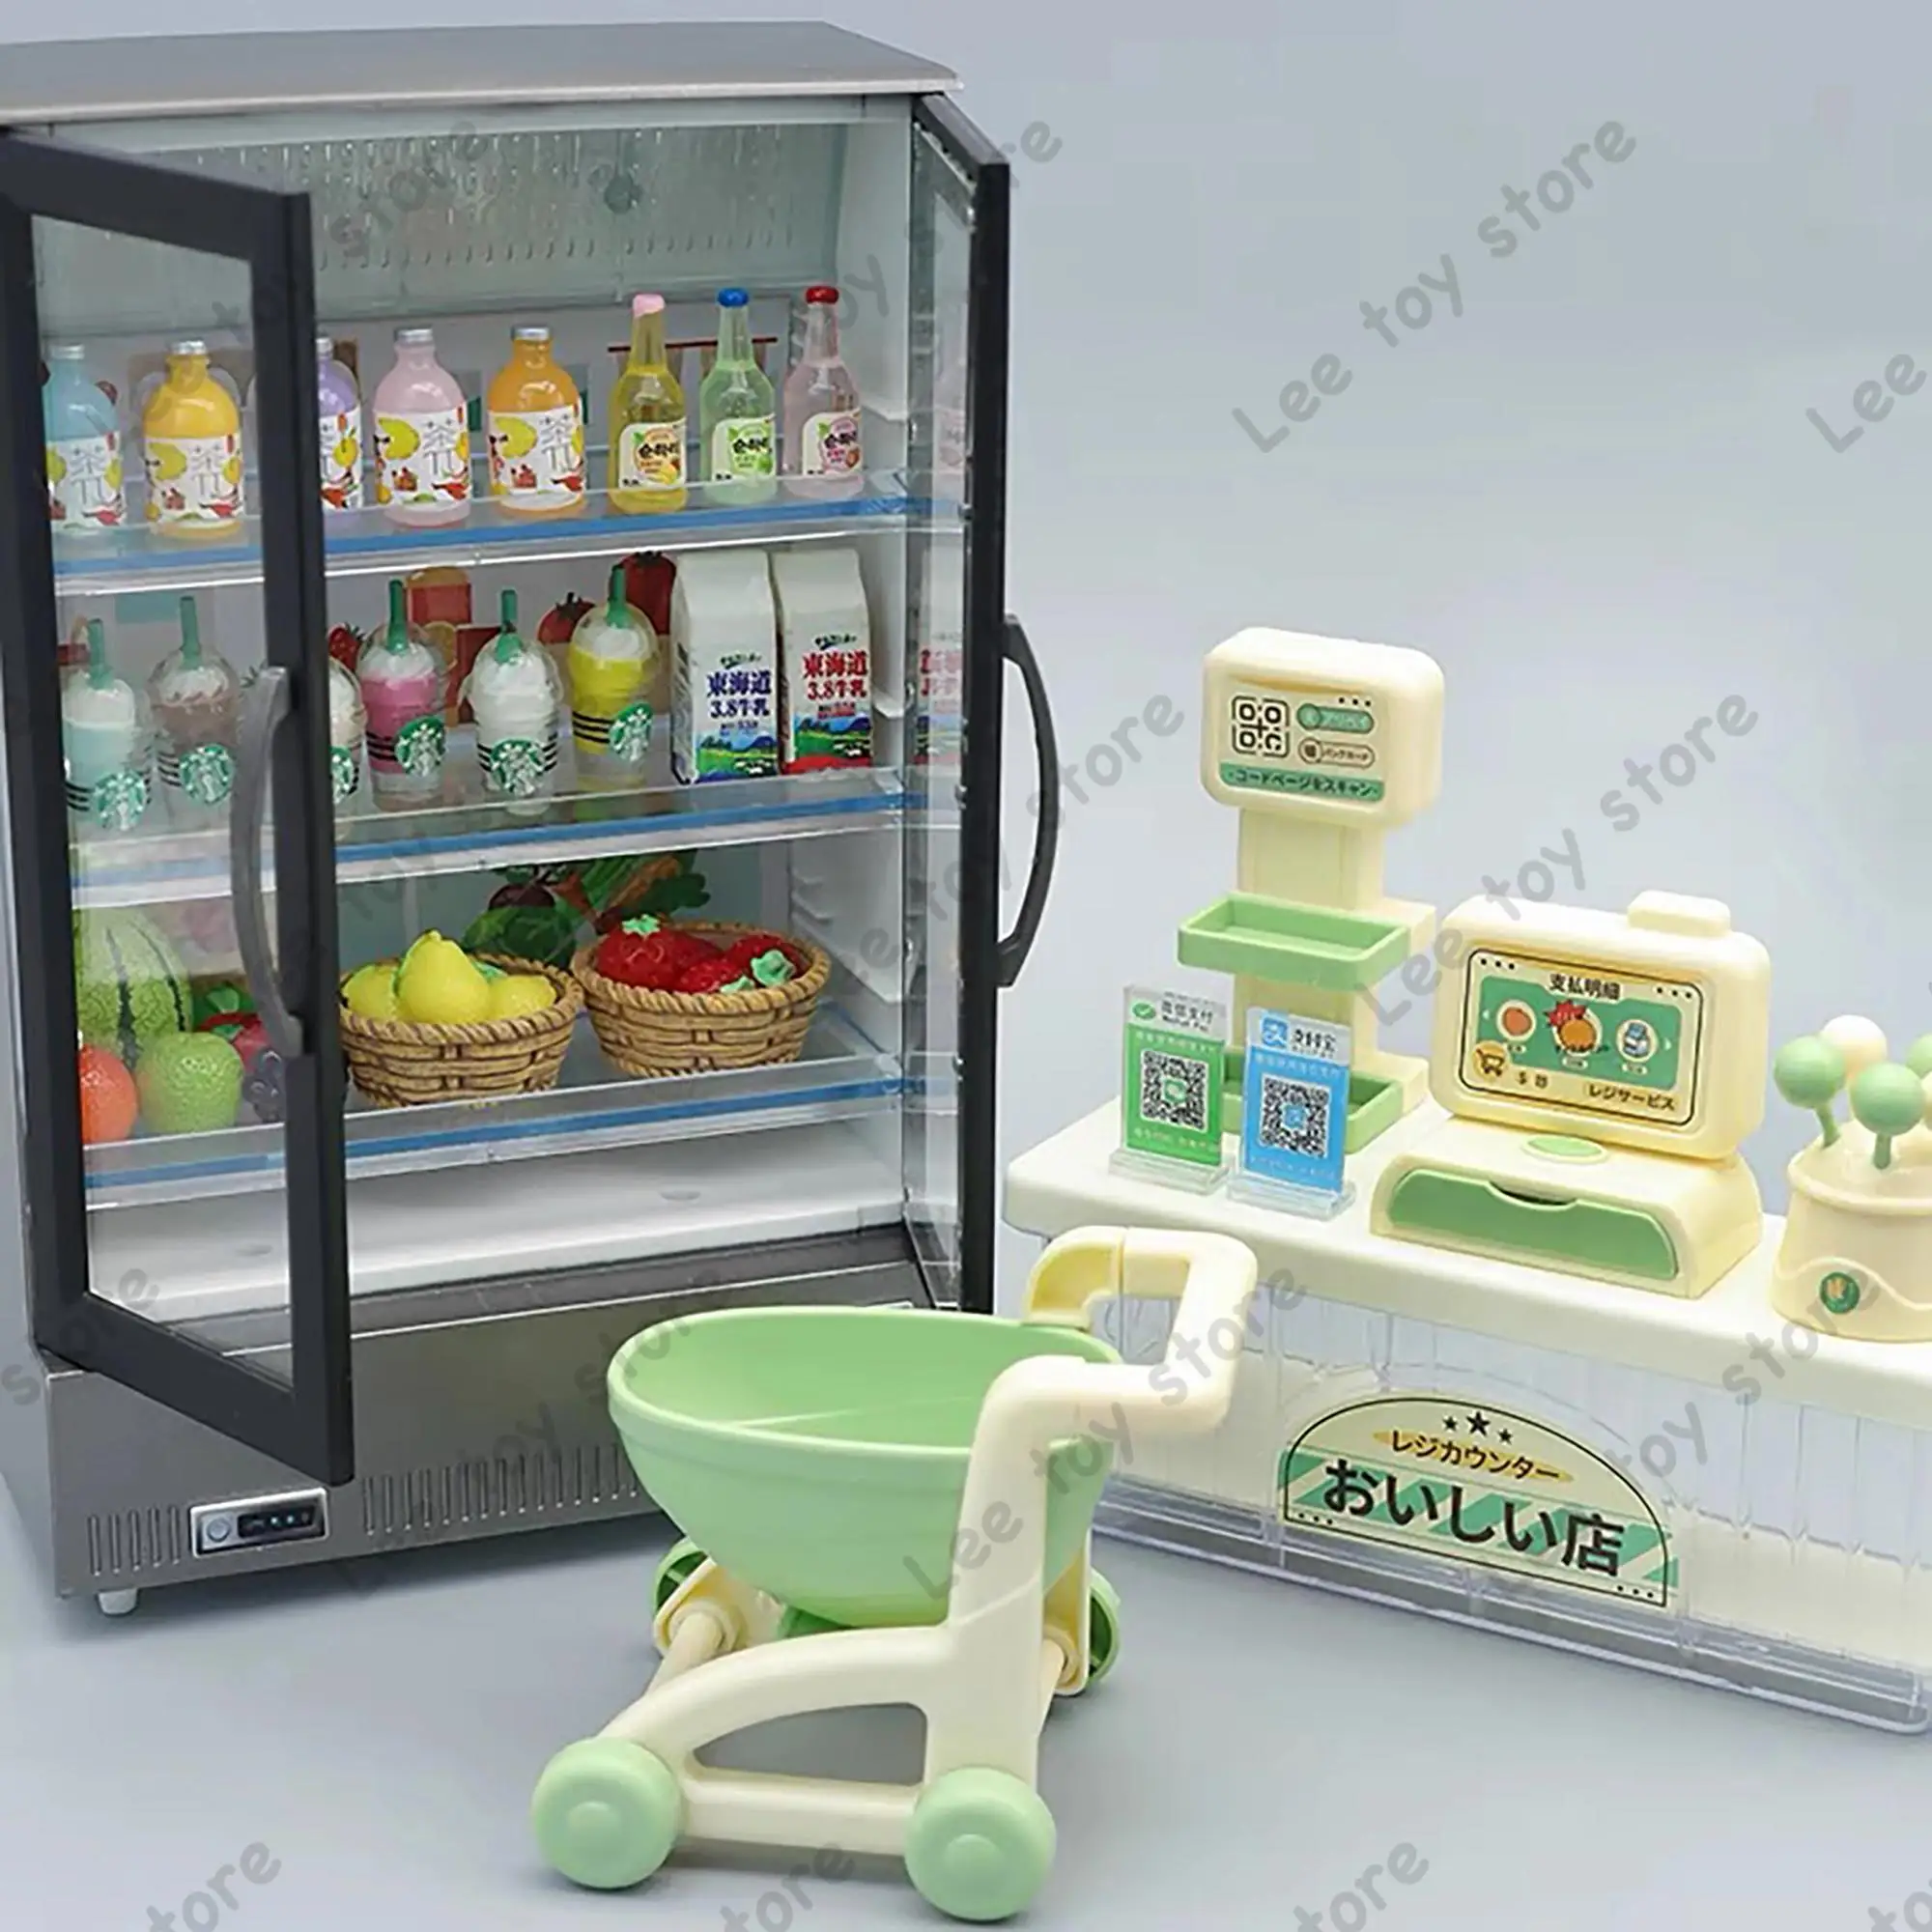 

Miniature Shop Food Toy Mini Freezer Cool Drink Item Furniture Counter Cart Handcraft Dollhouse Simulation Scenario Display Show